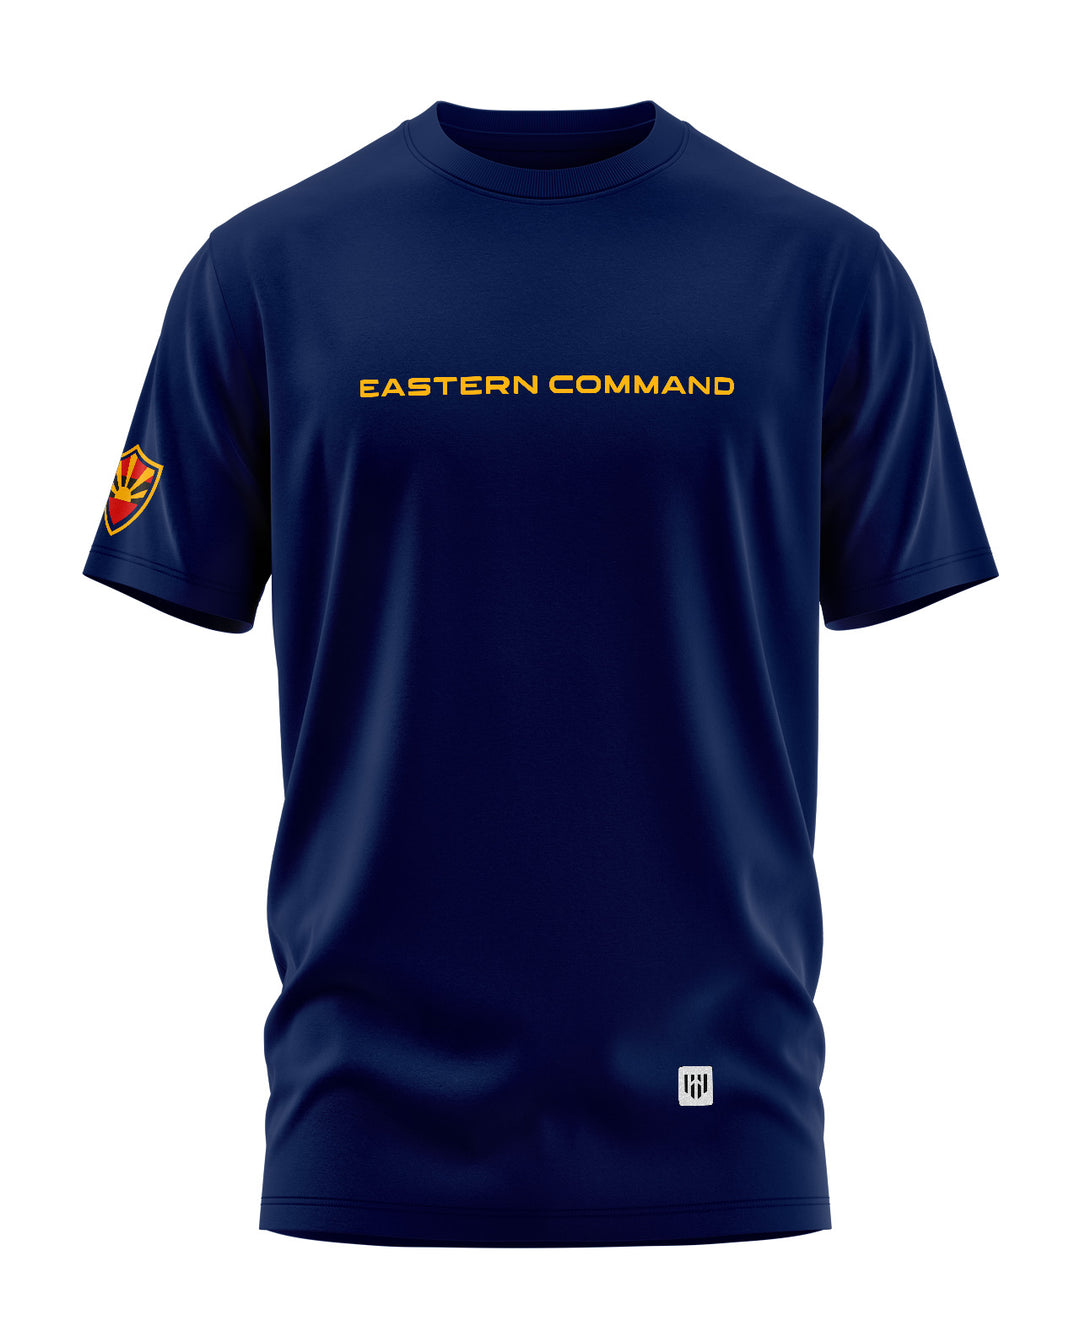 EASTERN COMMAND T-Shirt